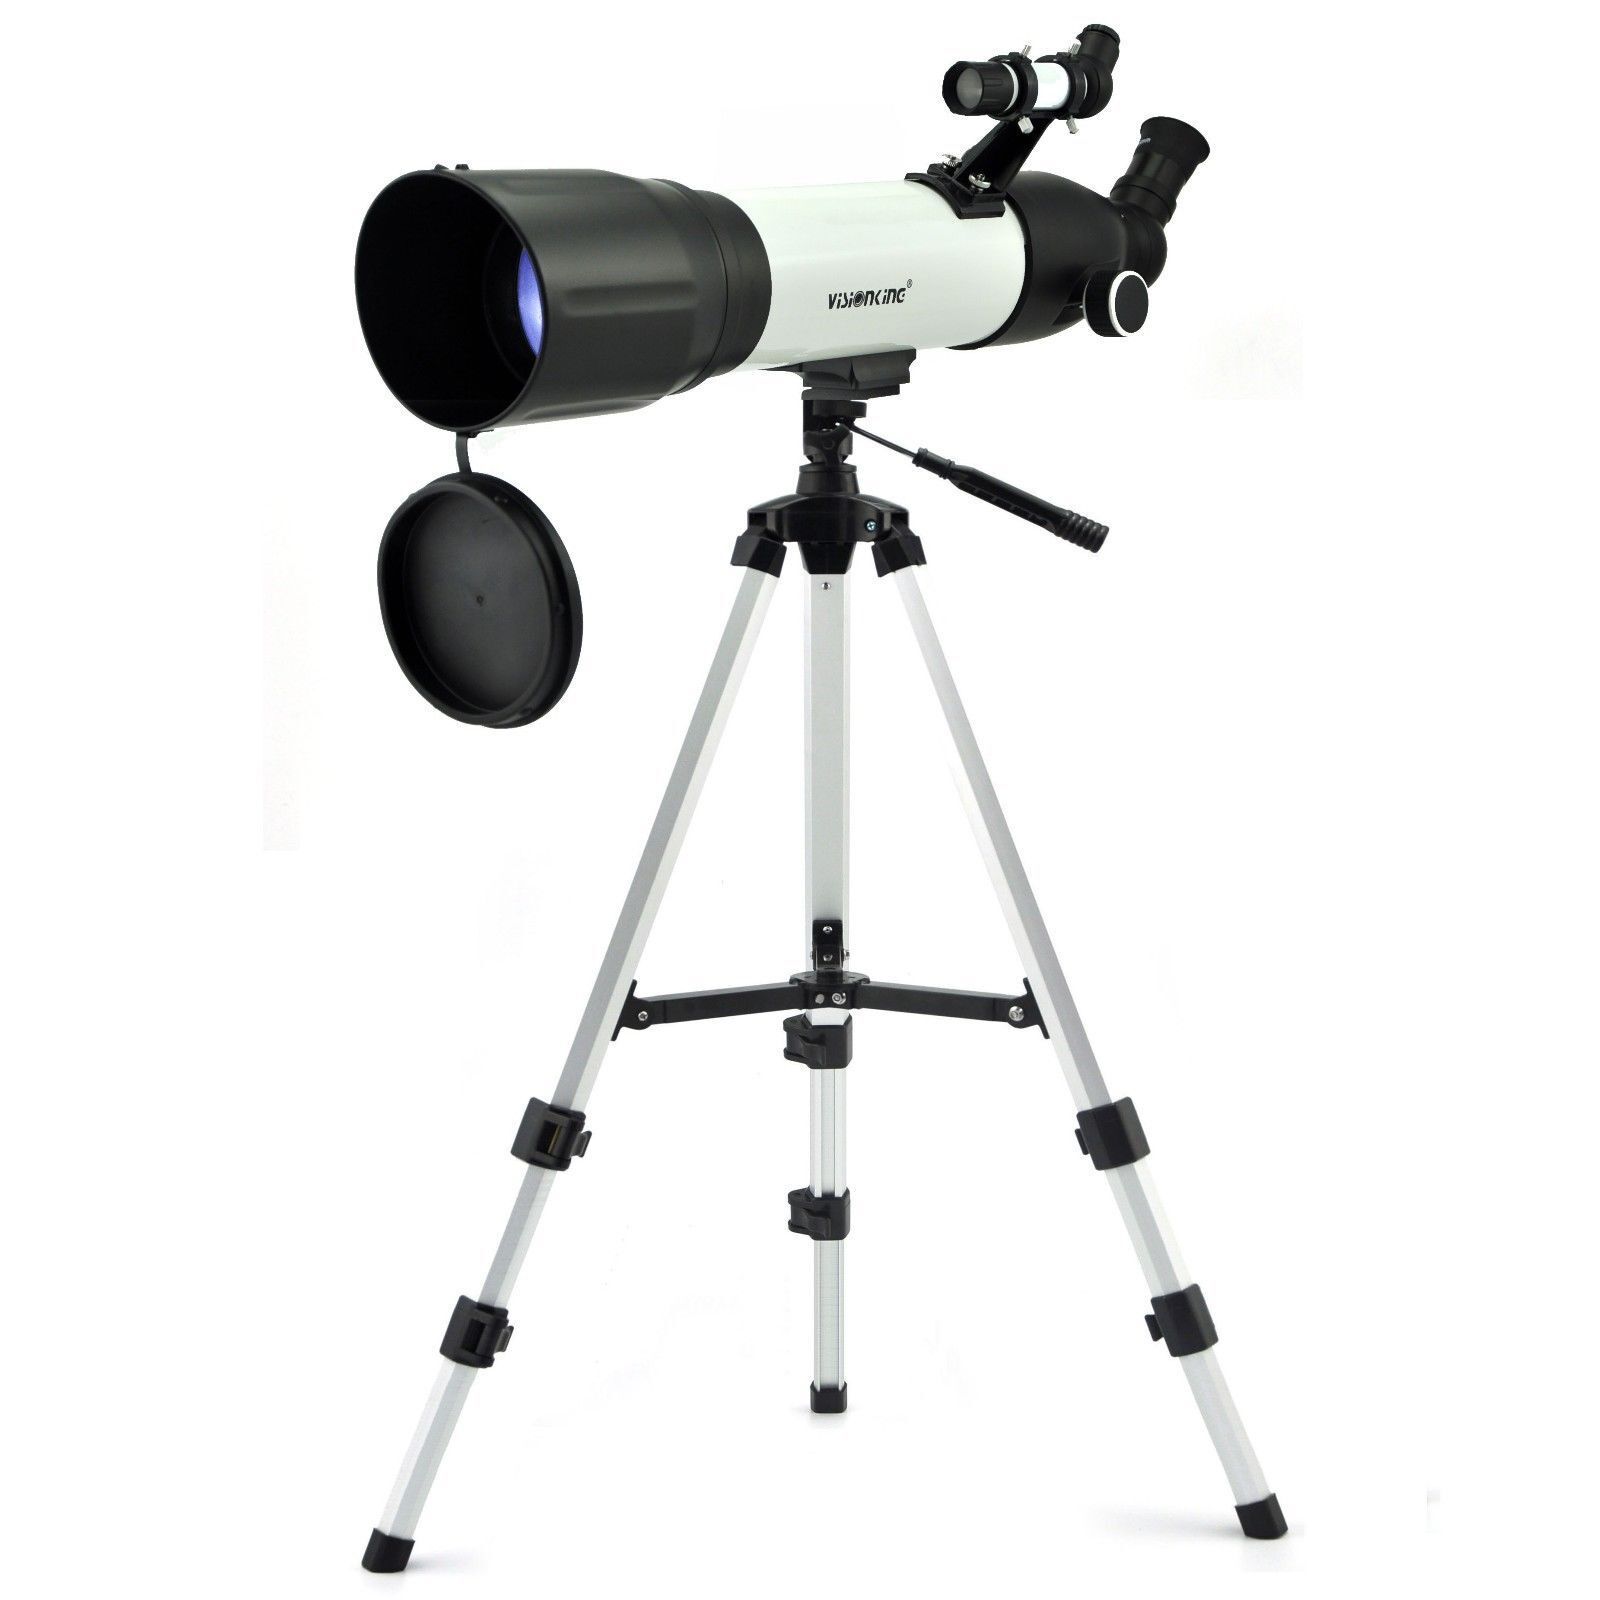 Visionking 90x500 90 mm Astronomical Telescope Spotting scope High tripod